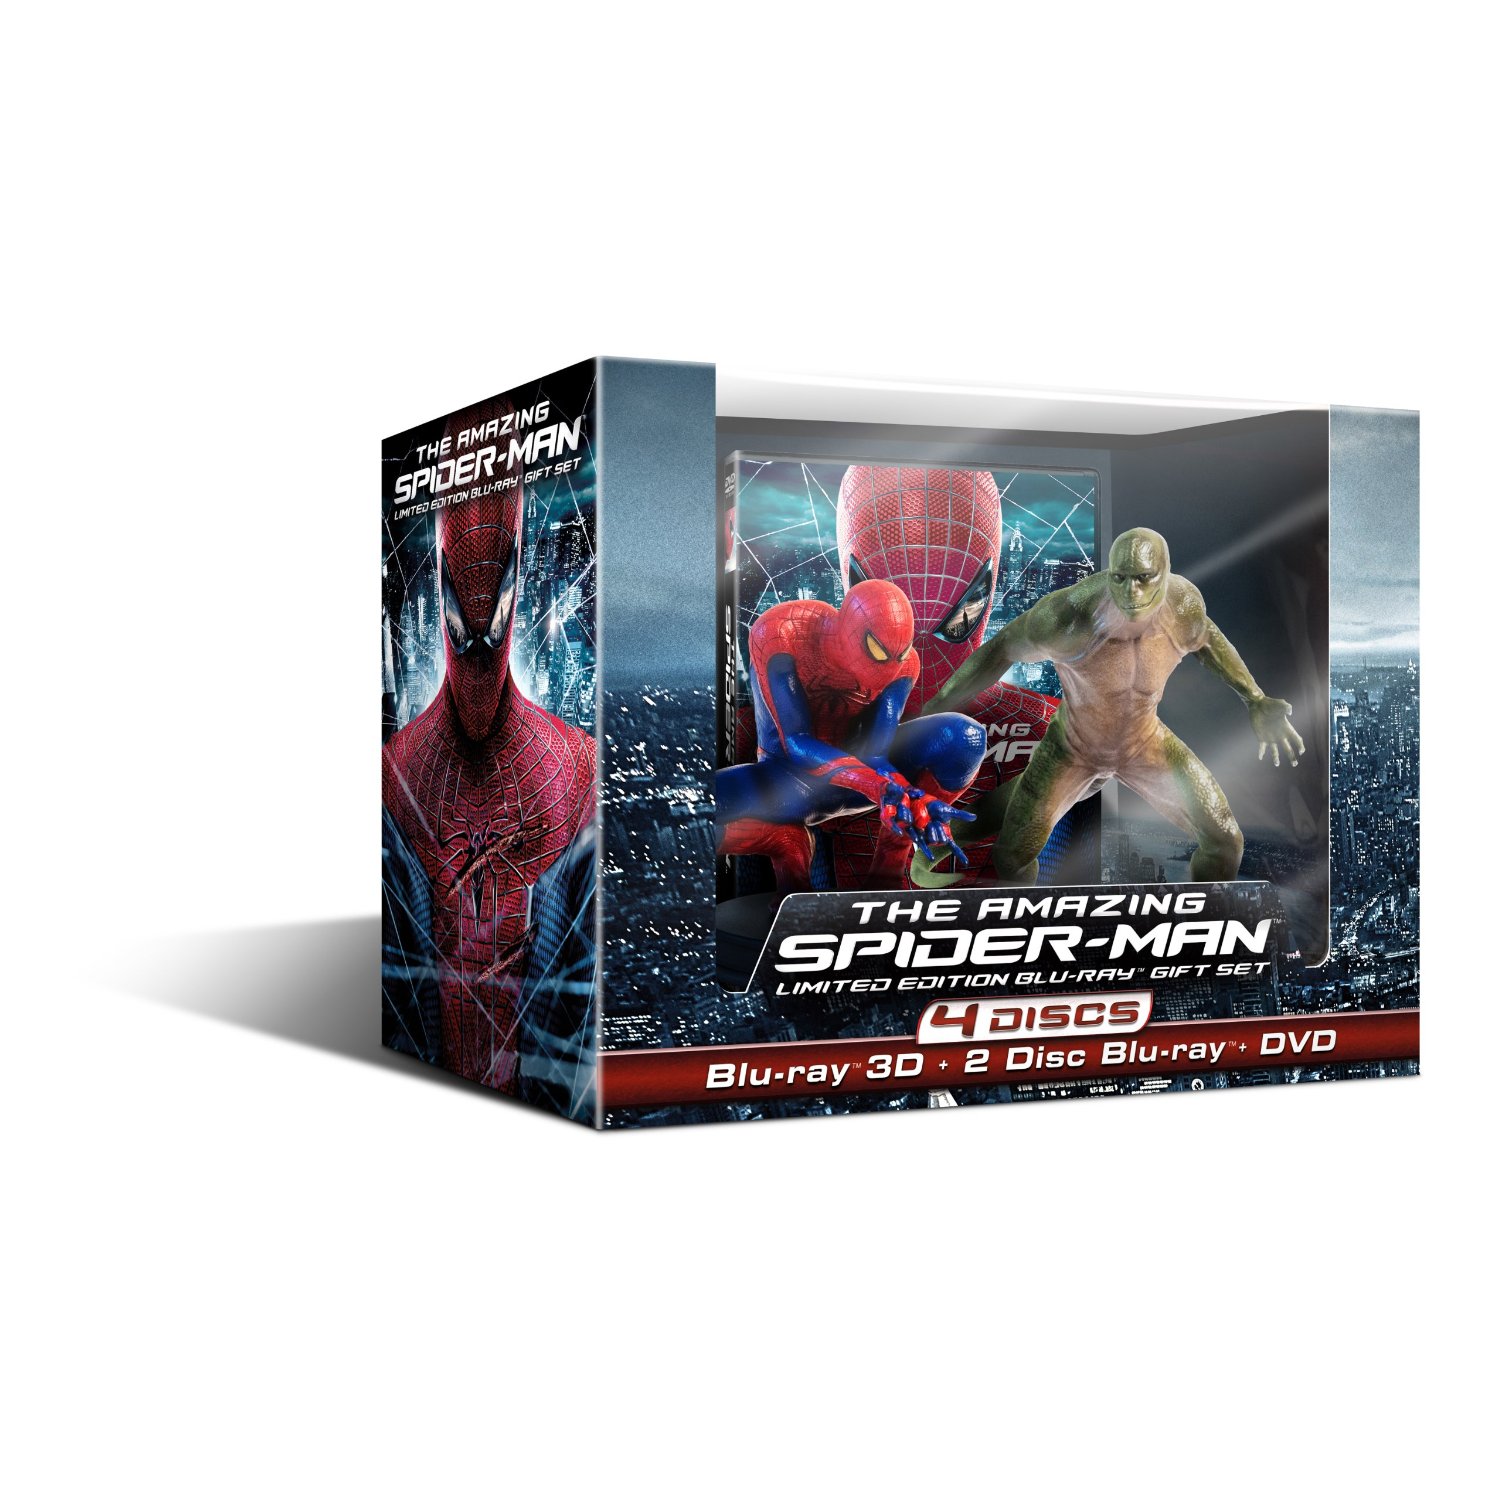 02.The Amazing Spider-Man 3D.jpg